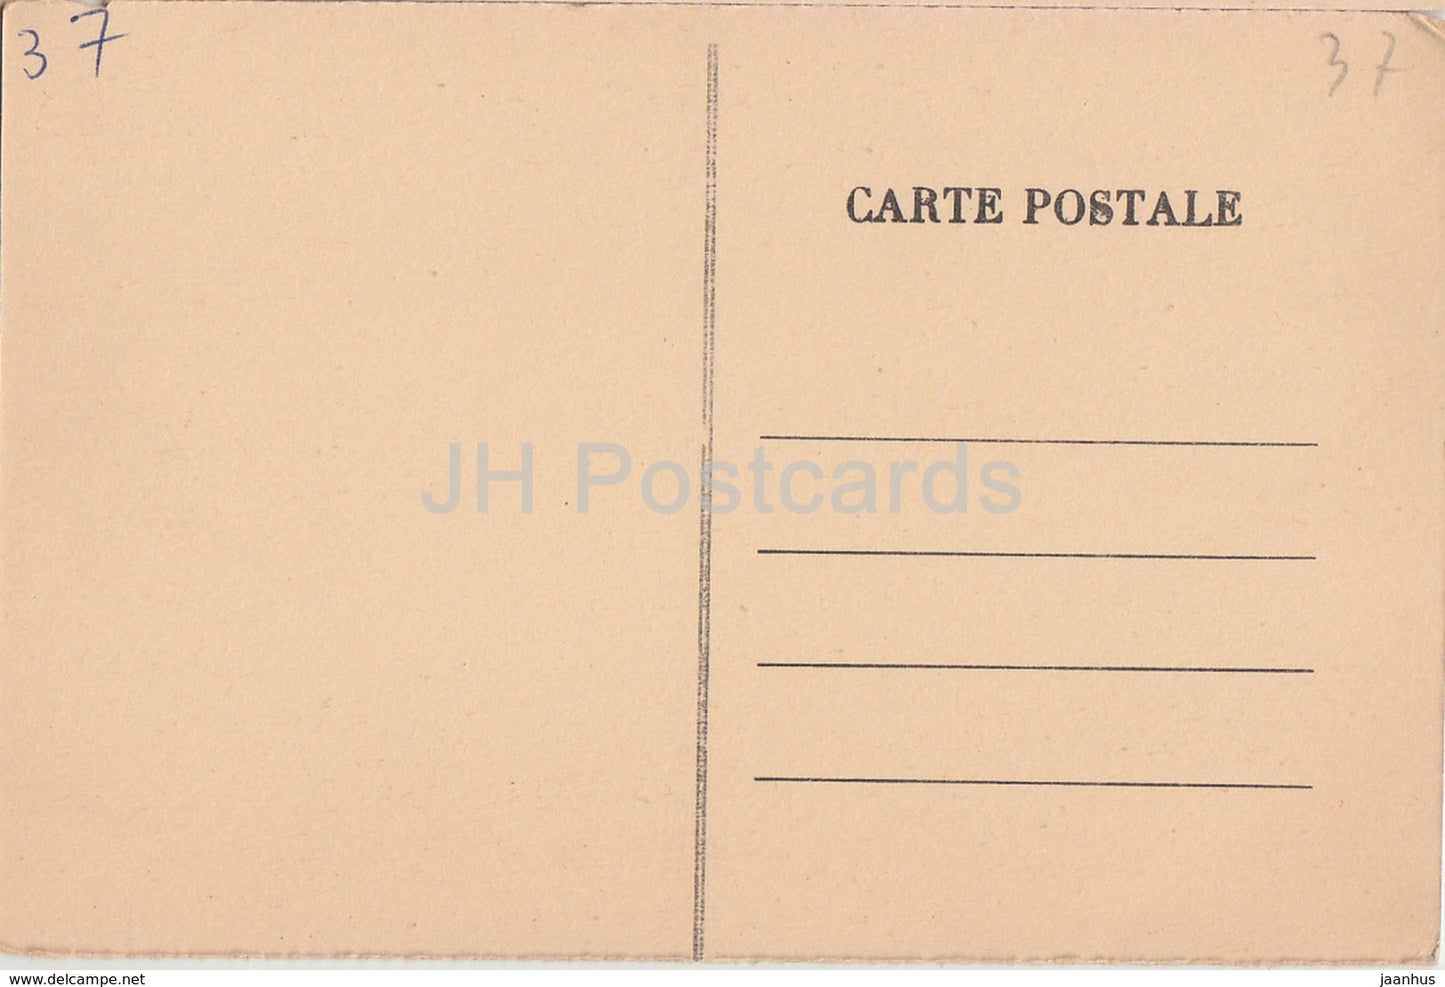 Loches - Chateau Royal - Schloss - alte Postkarte - Frankreich - unbenutzt